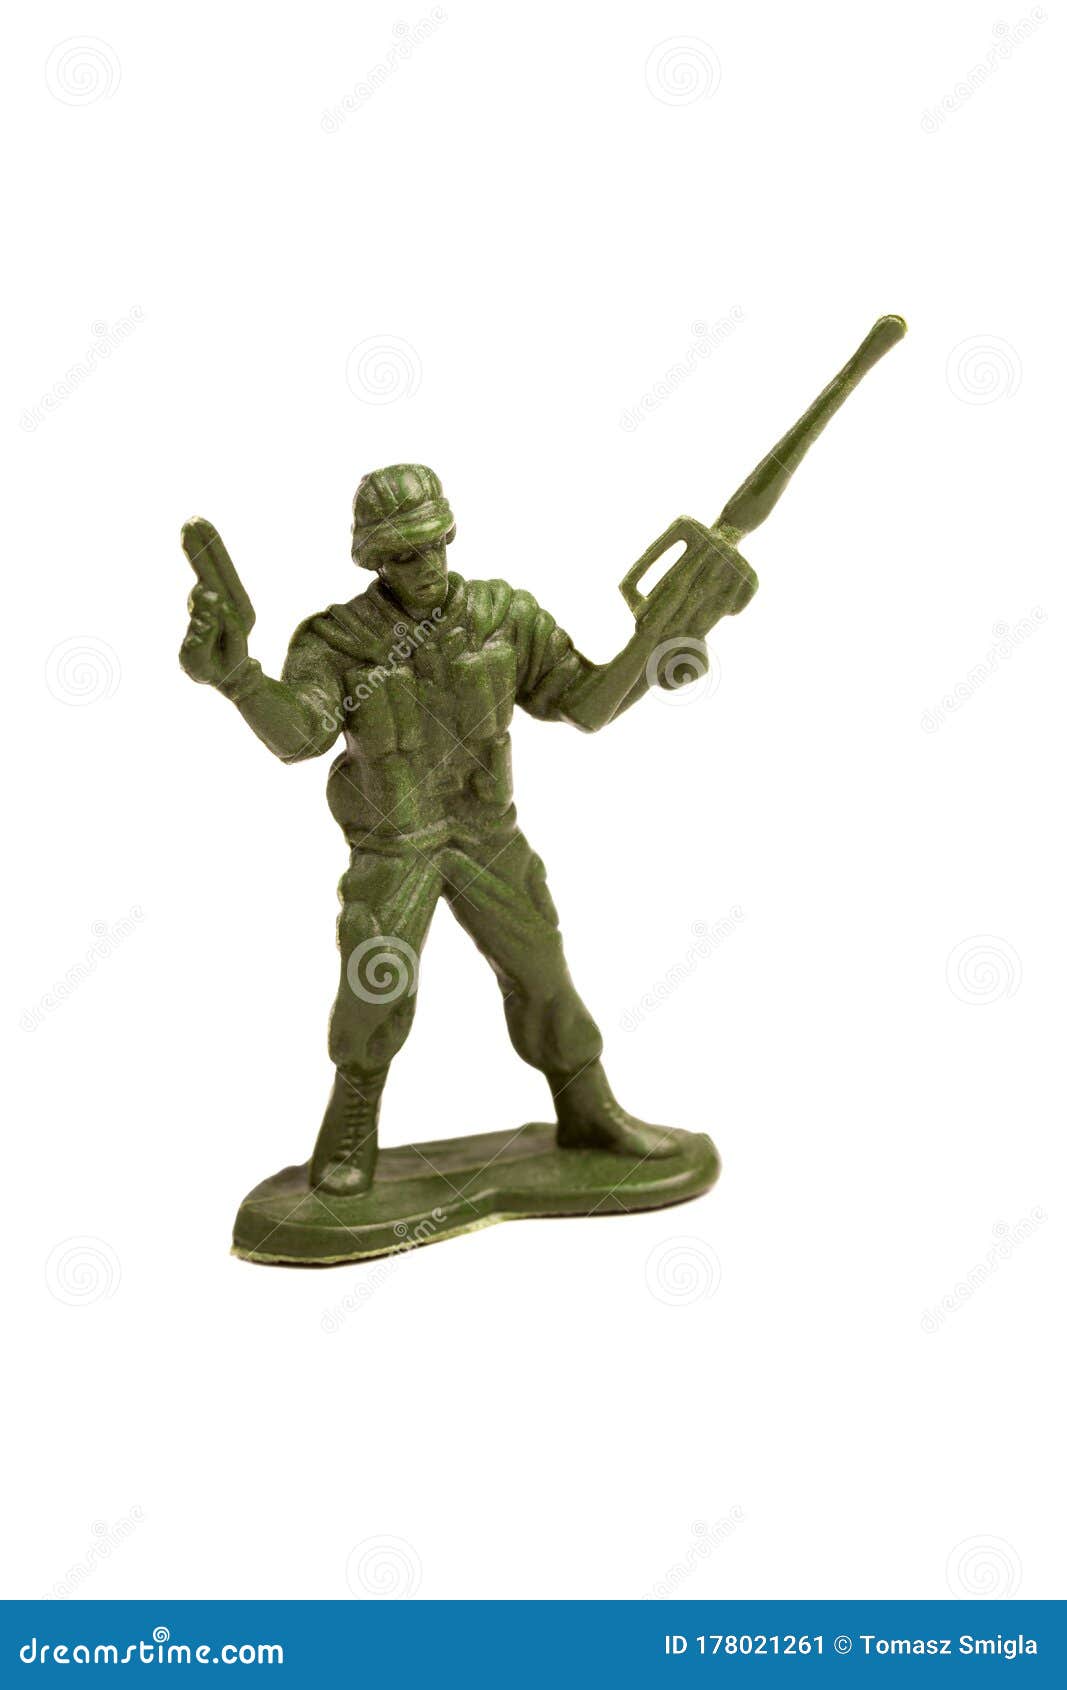 VOTACION: MEJOR PORTADA DE IRON MAIDEN (antes mejor canción y antes mejor disco) - Página 17 Simple-dark-green-plastic-toy-soldier-holding-pistol-machine-gun-hands-them-up-victory-gesture-infantry-figure-object-178021261